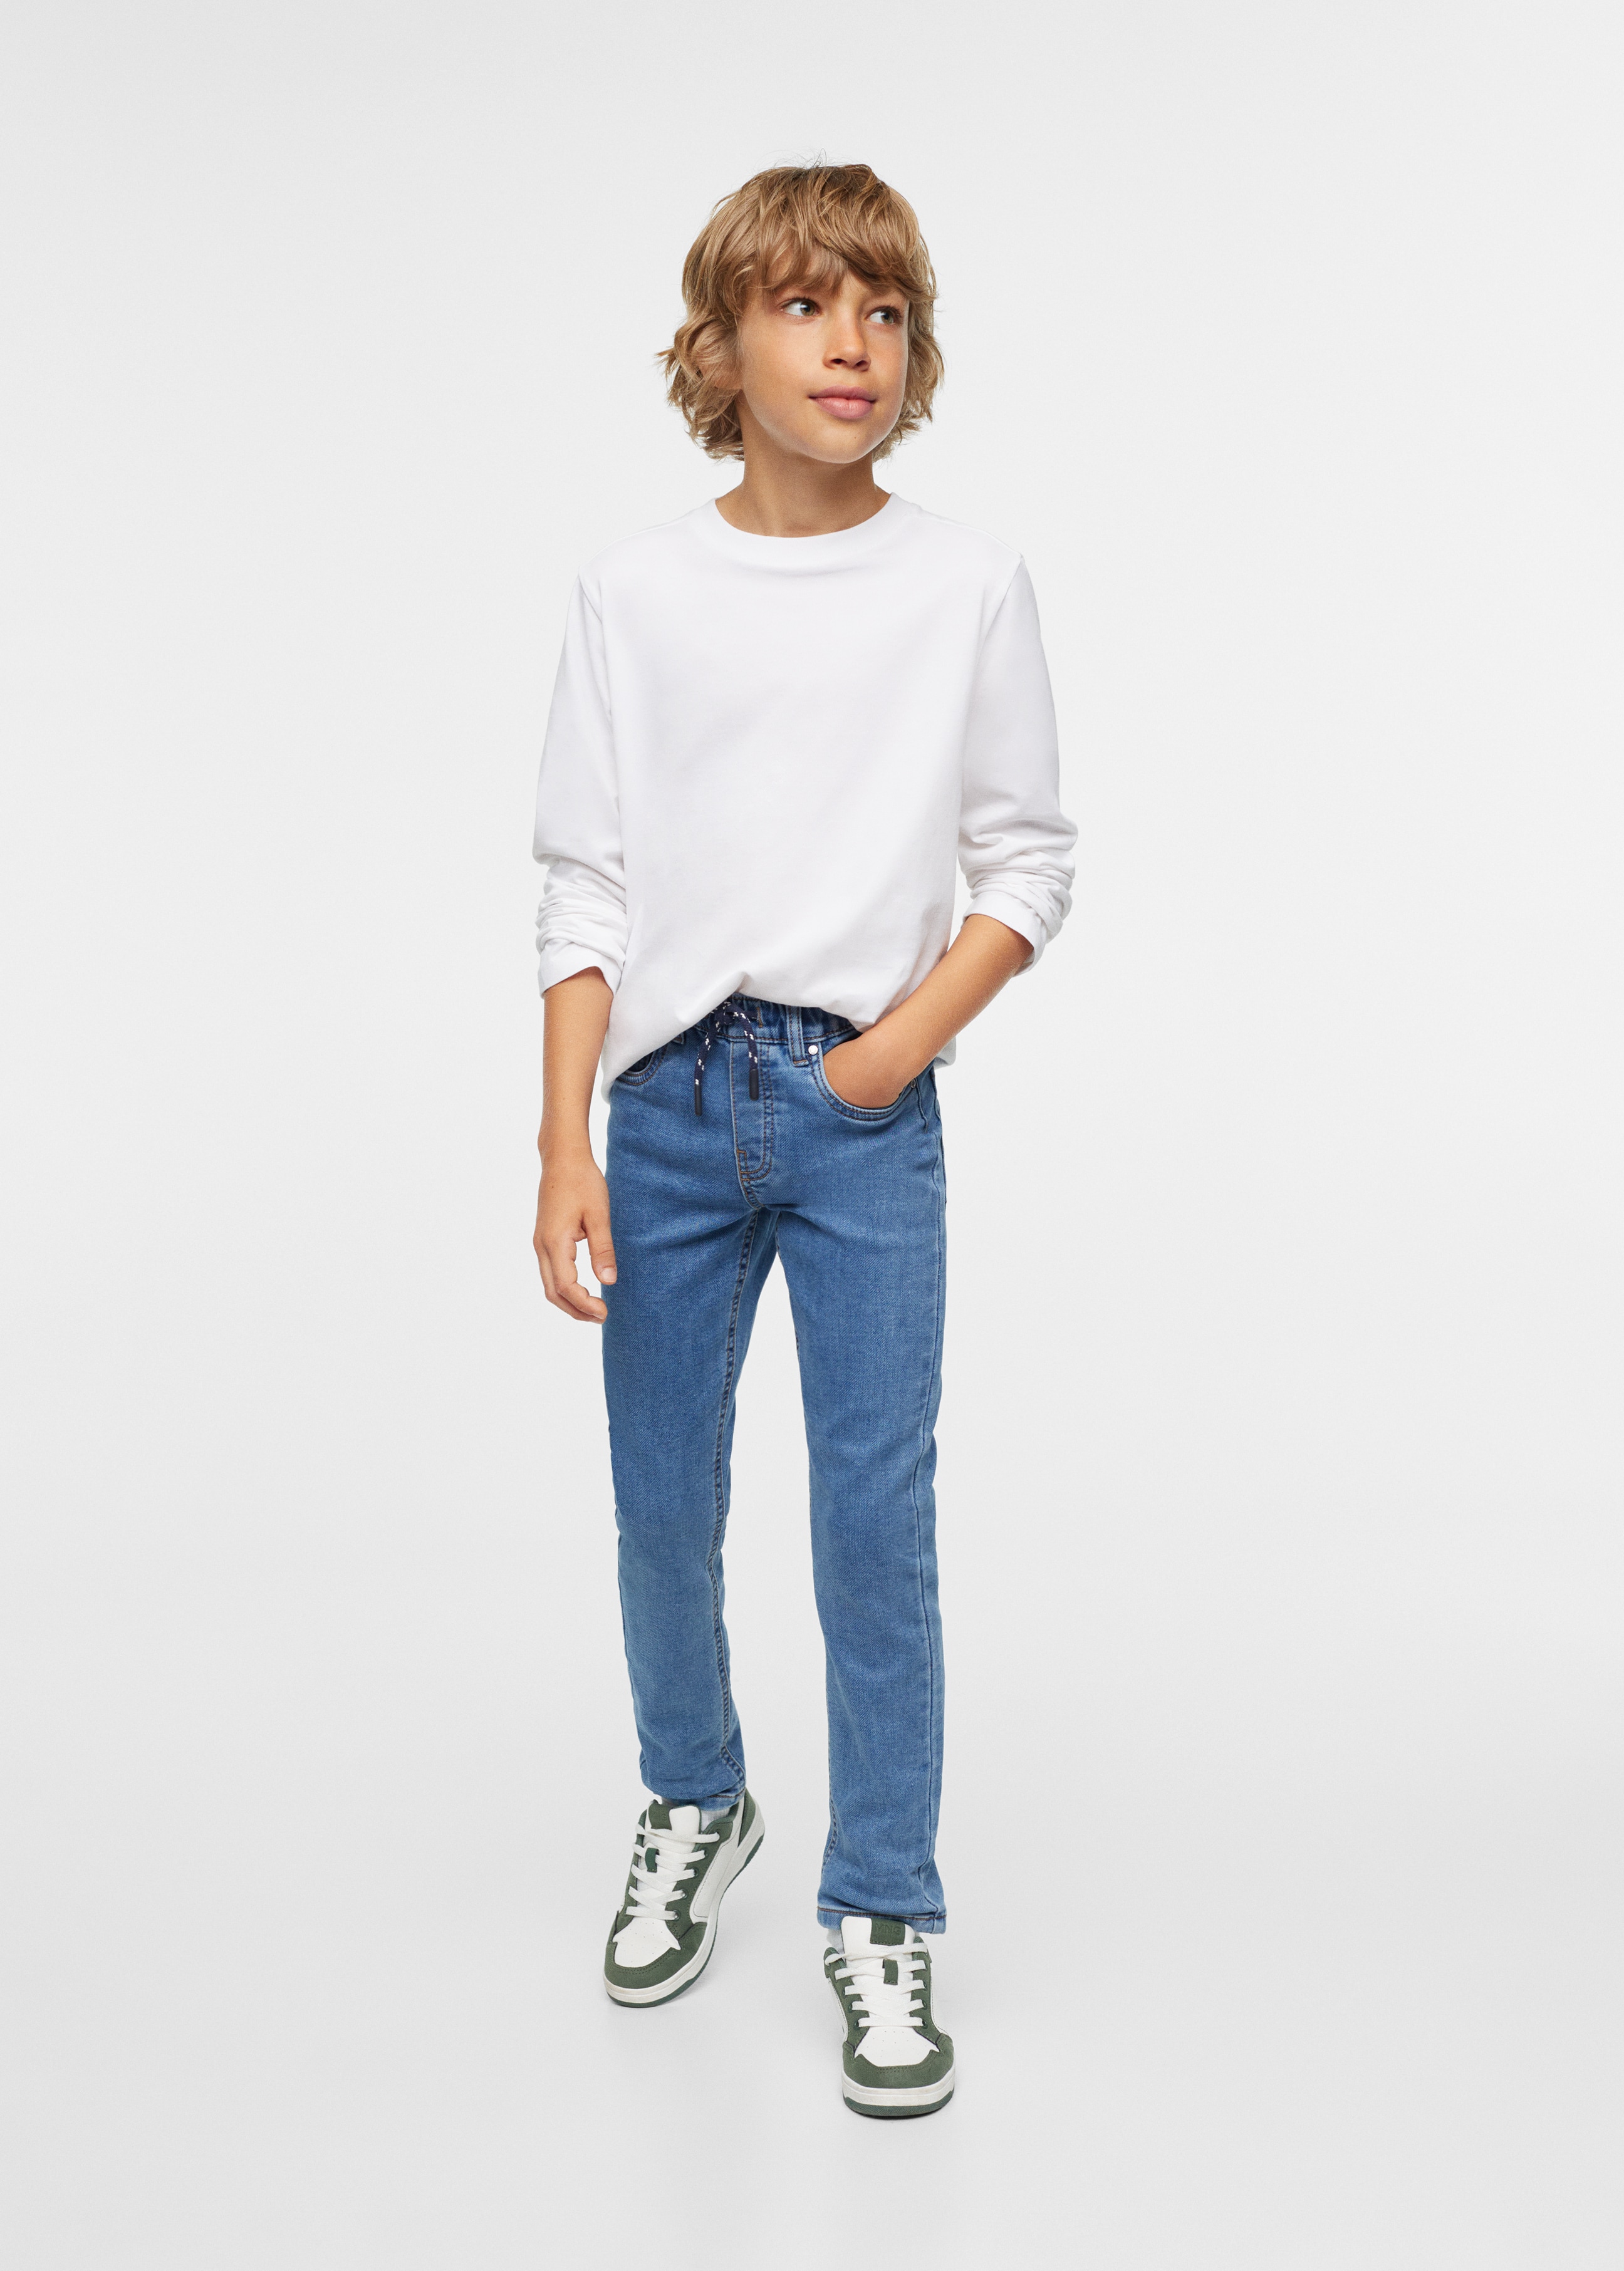 Lace drawstring waist jeans - Medium plane